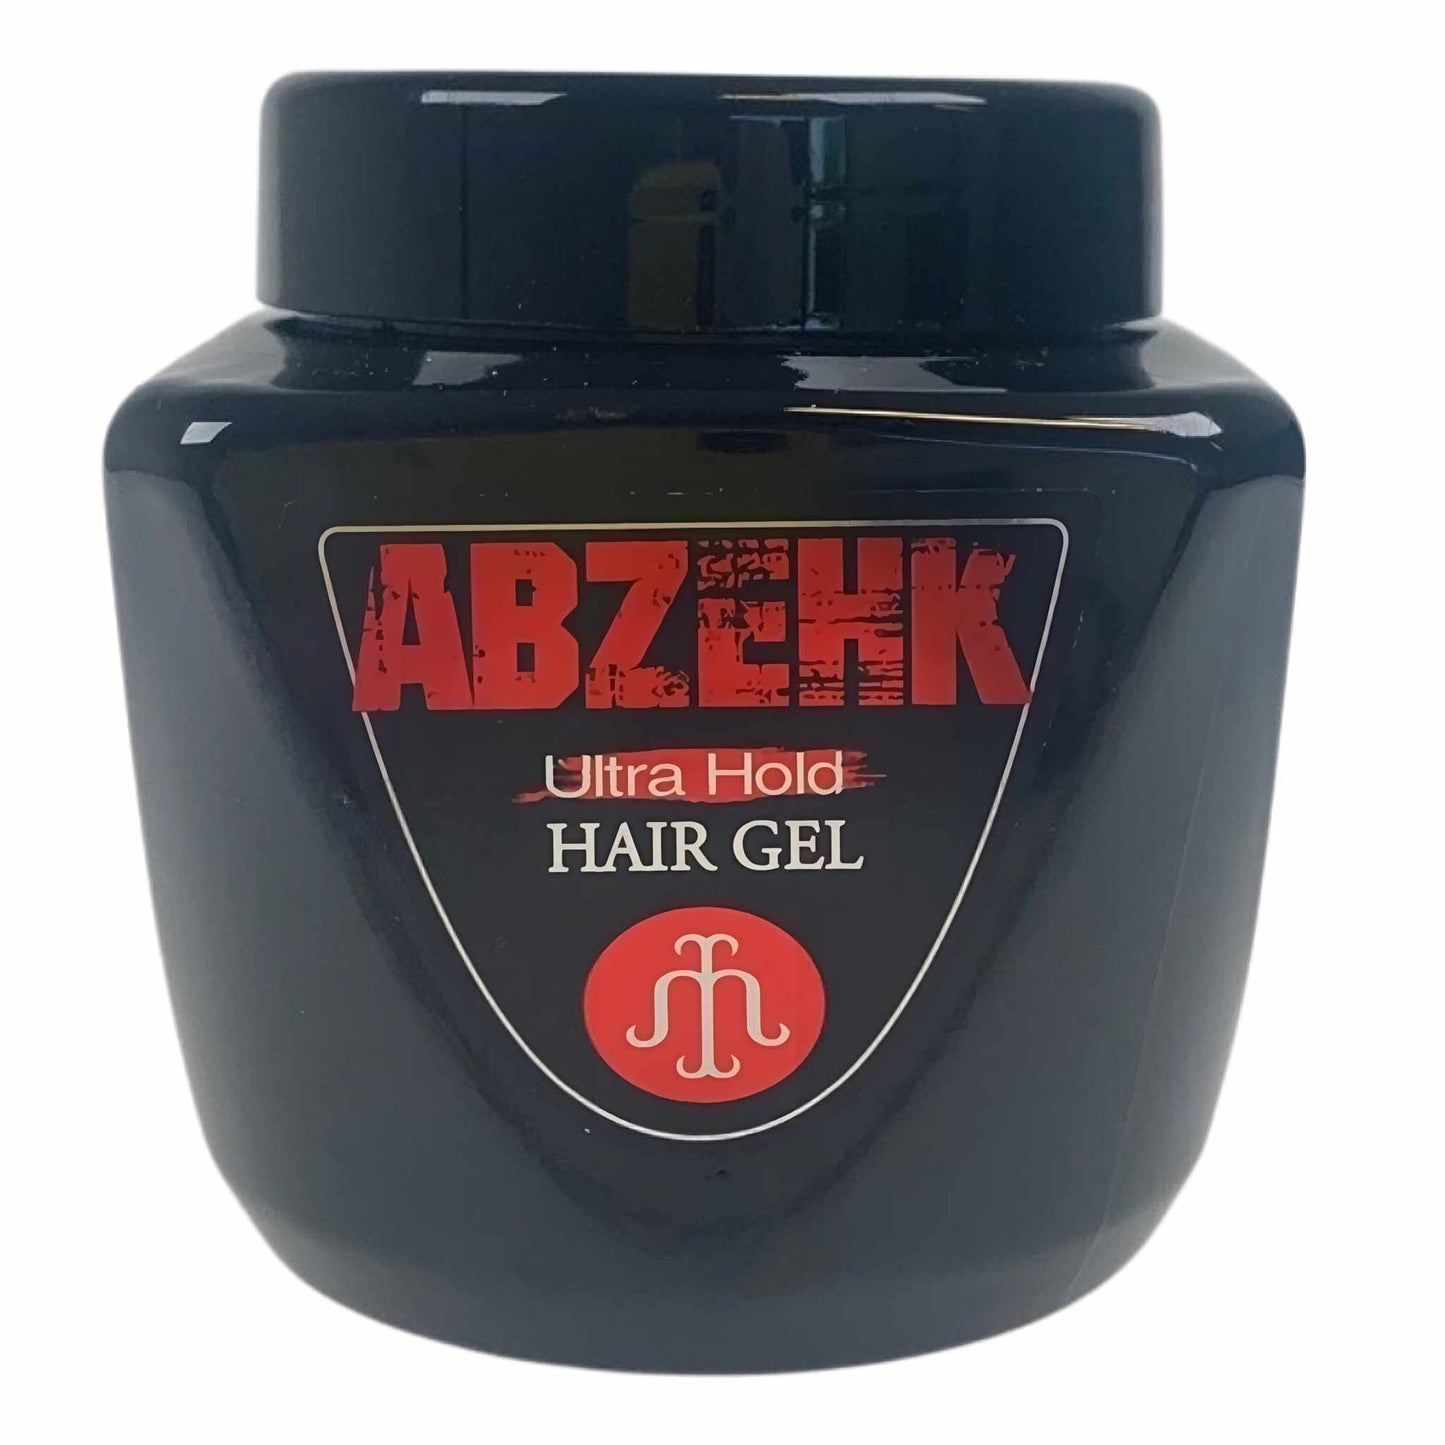 Abzehk Hair Gel Ultra Hold 300 ml